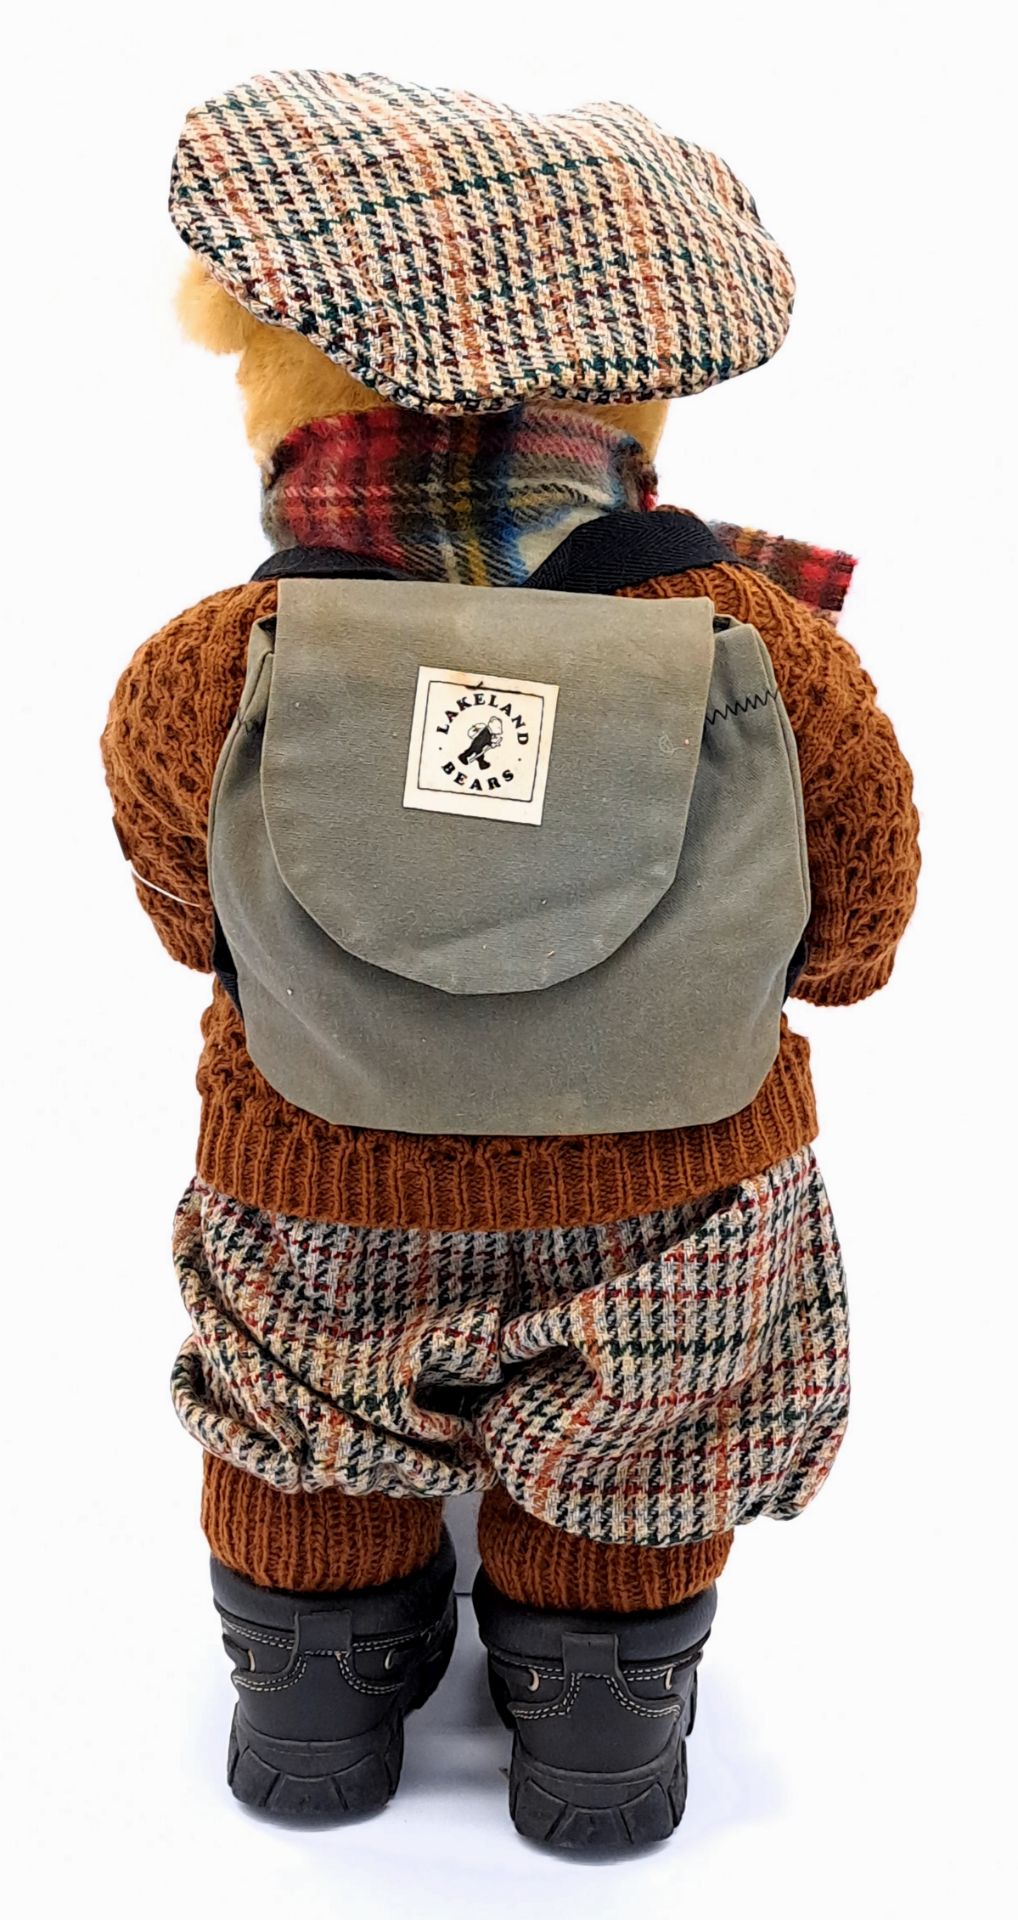 Dean's Rag Book (UK) Lakeland Bears vintage teddy bear - Bild 2 aus 2